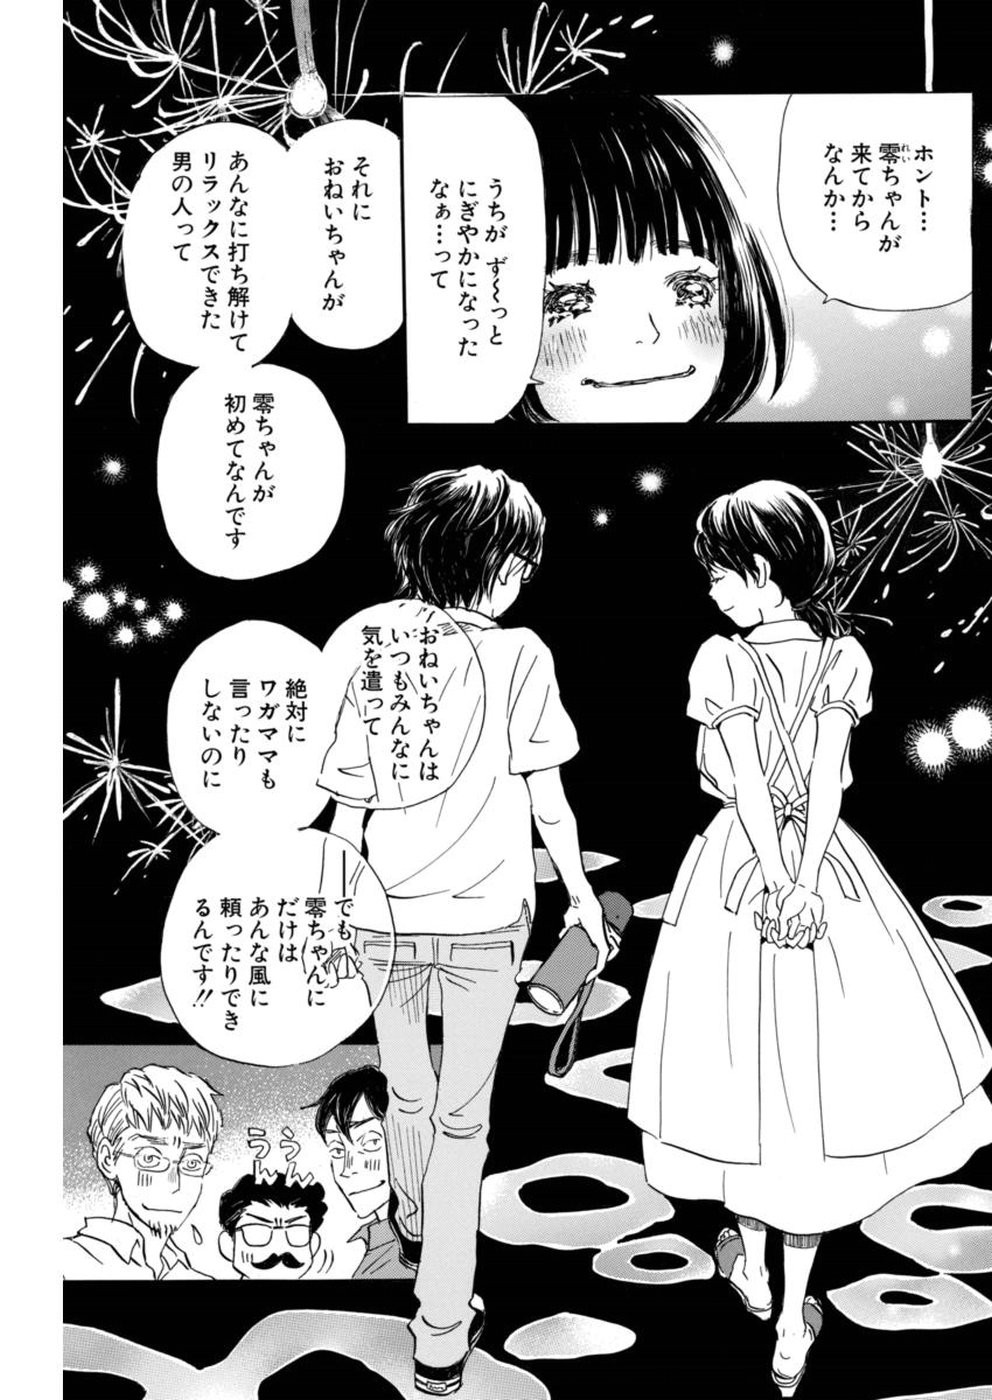 3 Gatsu no Lion - Chapter 147 - Page 9